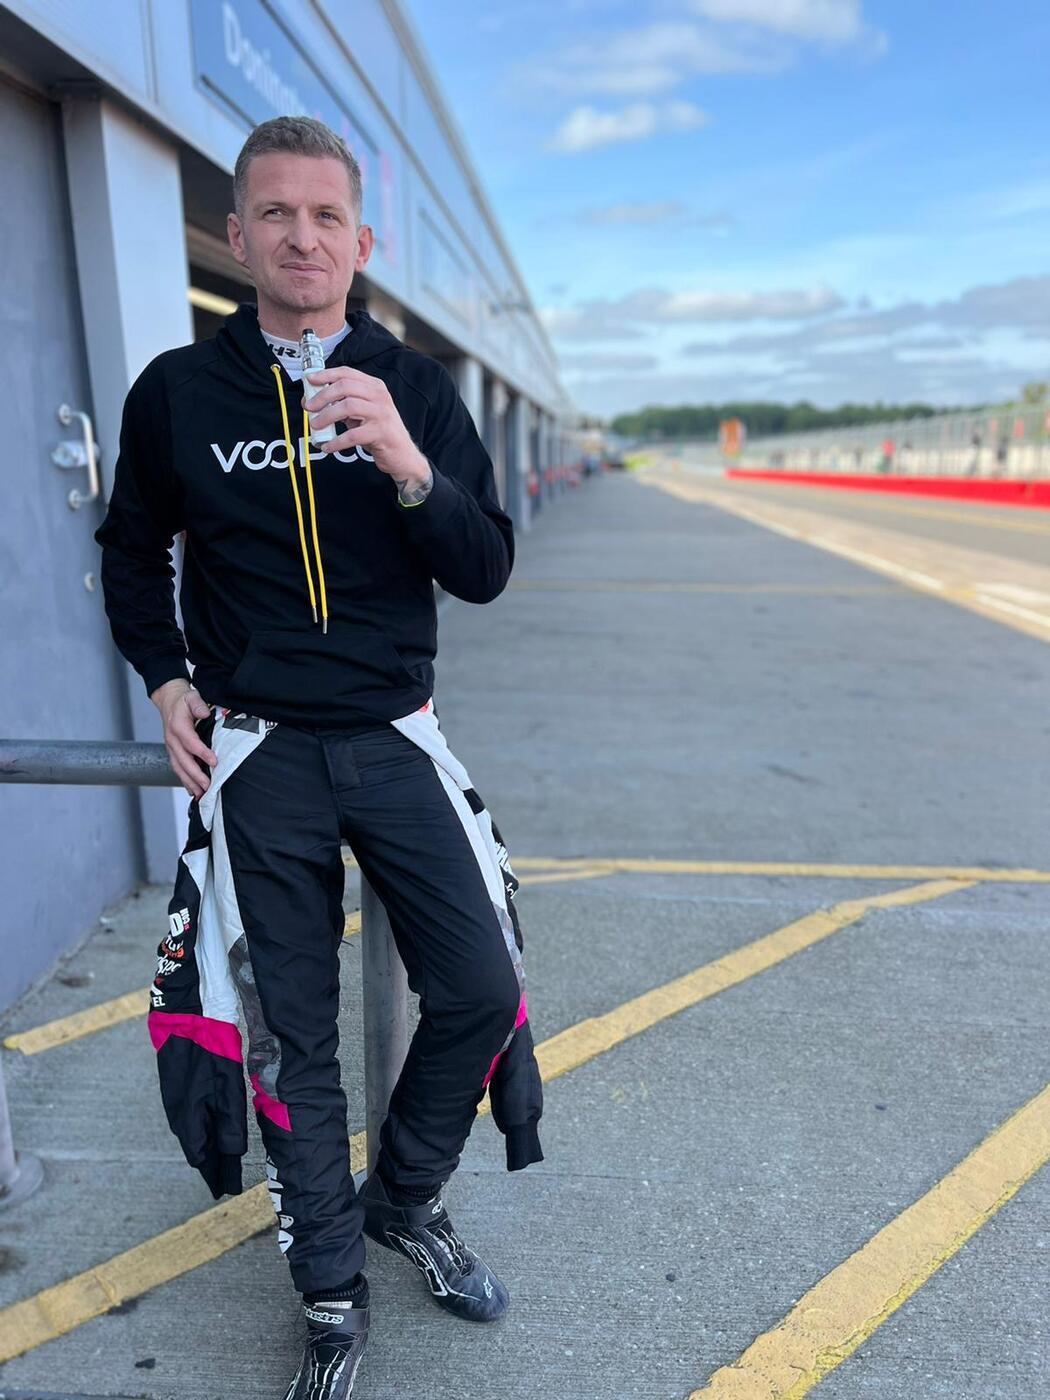 Vape brand Voopoo backs BTCC racing driver Will Powell